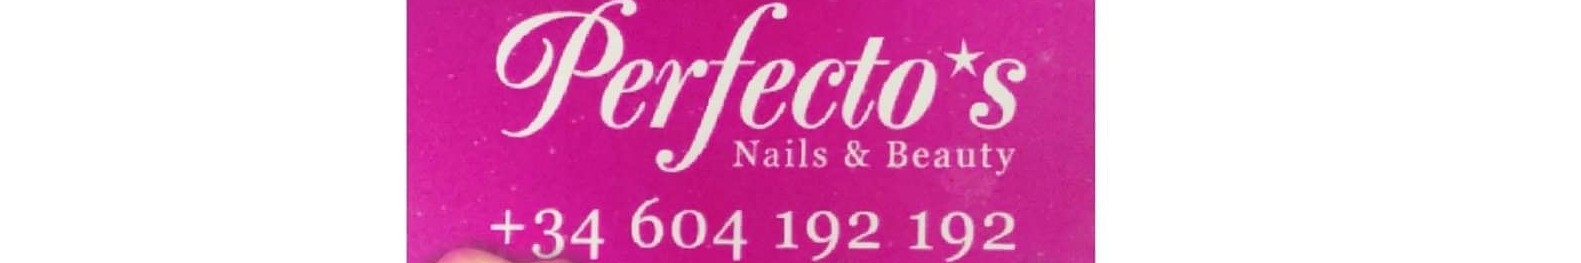 Perfecto’s Nails & Beauty